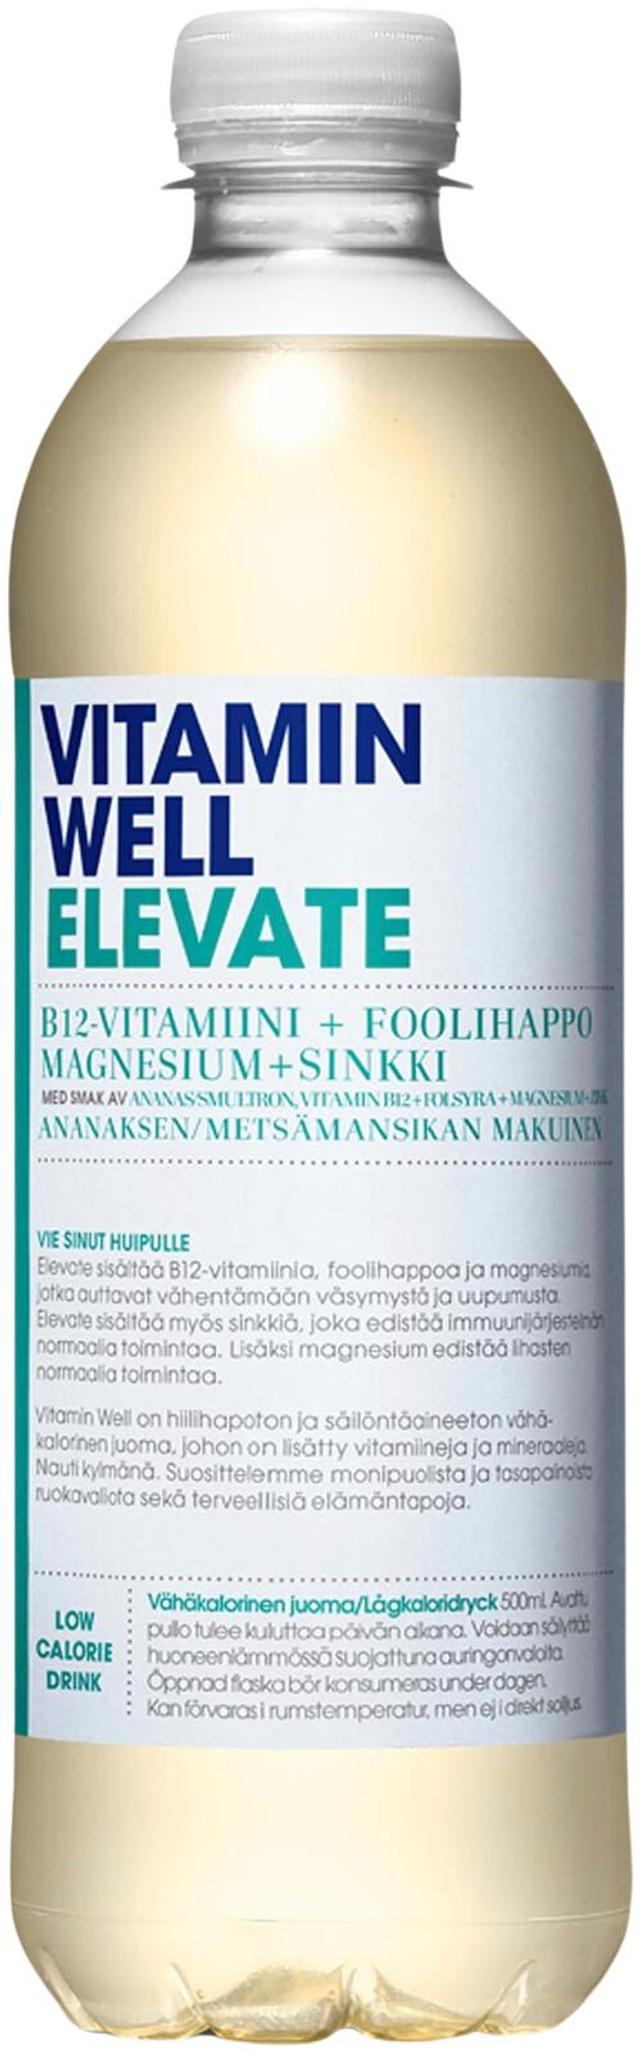 500ml Vitamin Well Elevate hyvinvointijuoma